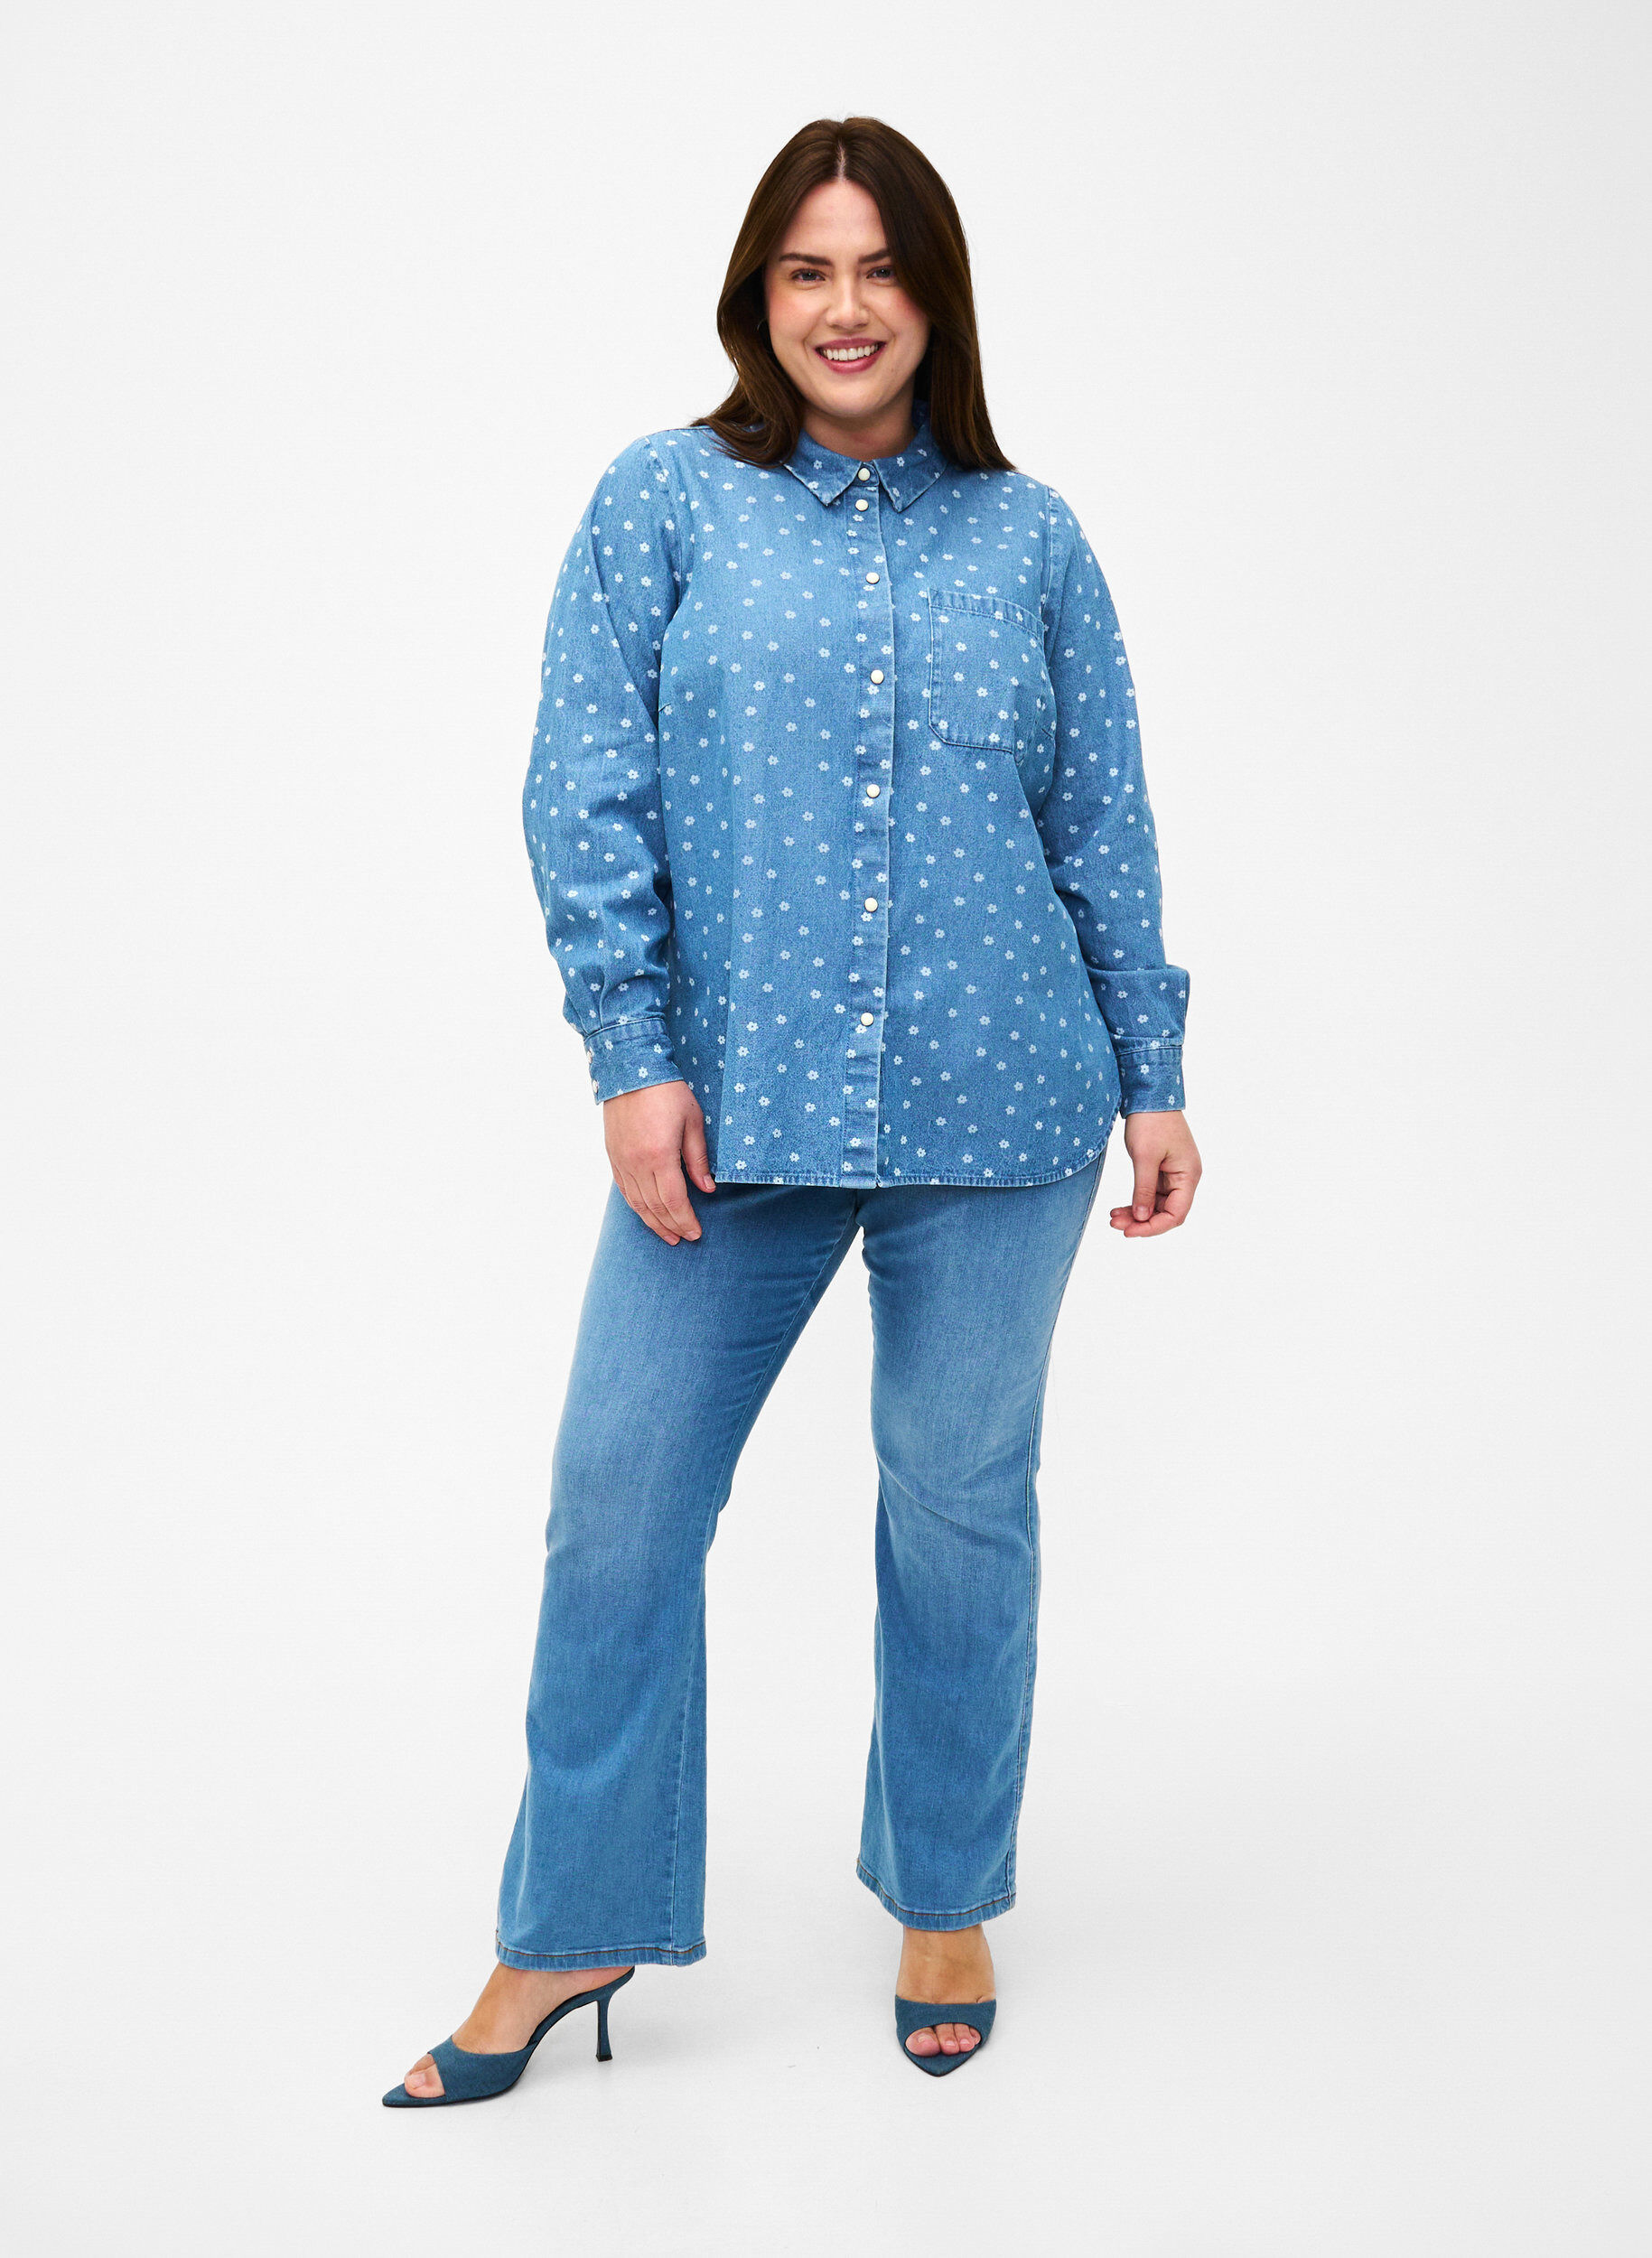 Buy Xpose Women Blue Polka Dots Shirt Style Top online